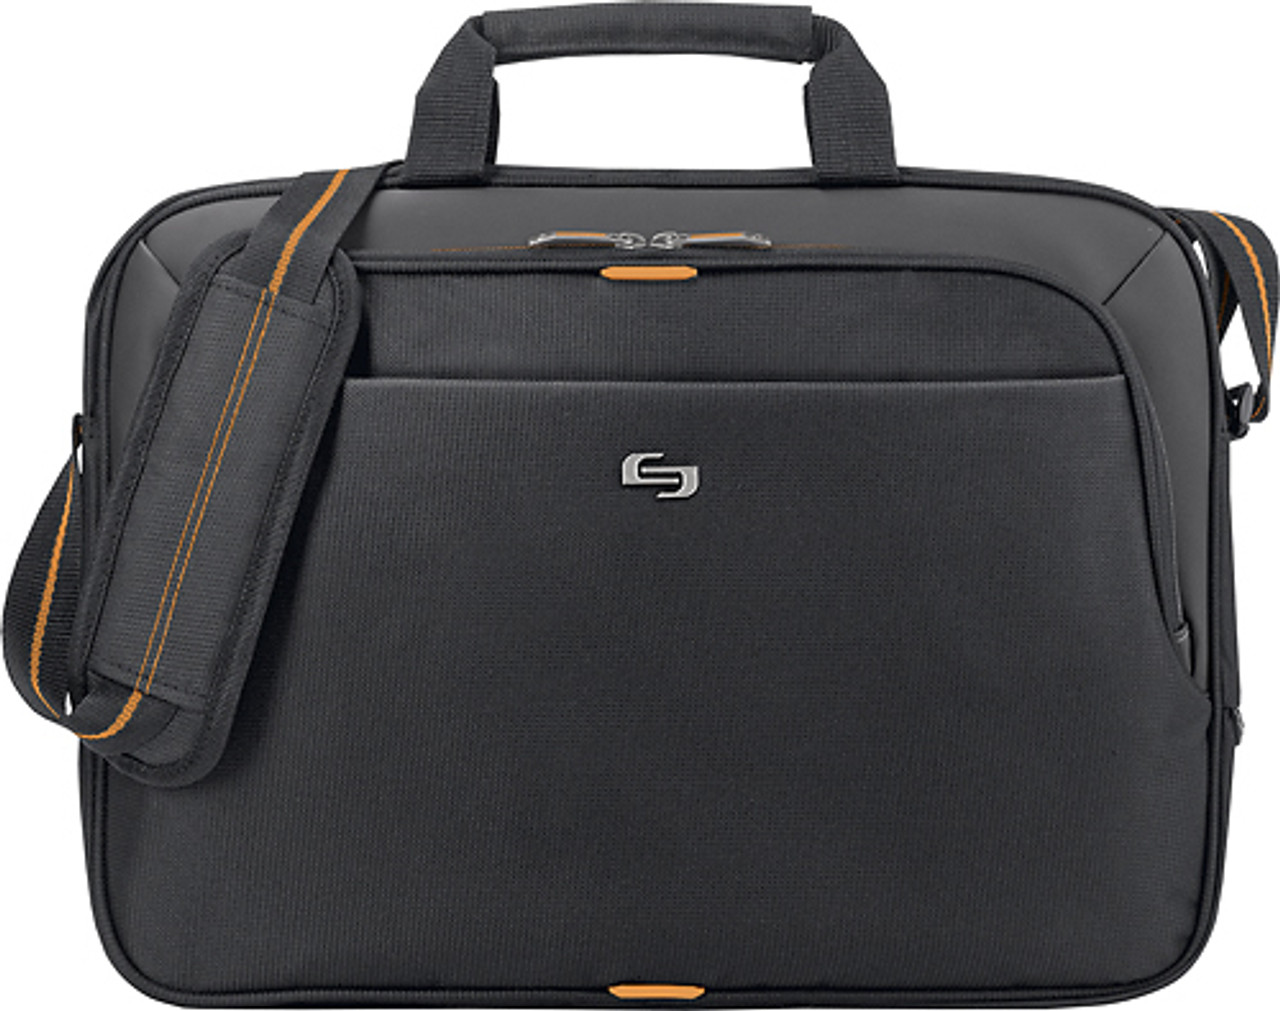 Solo - Urban Laptop Briefcase - Black/Orange